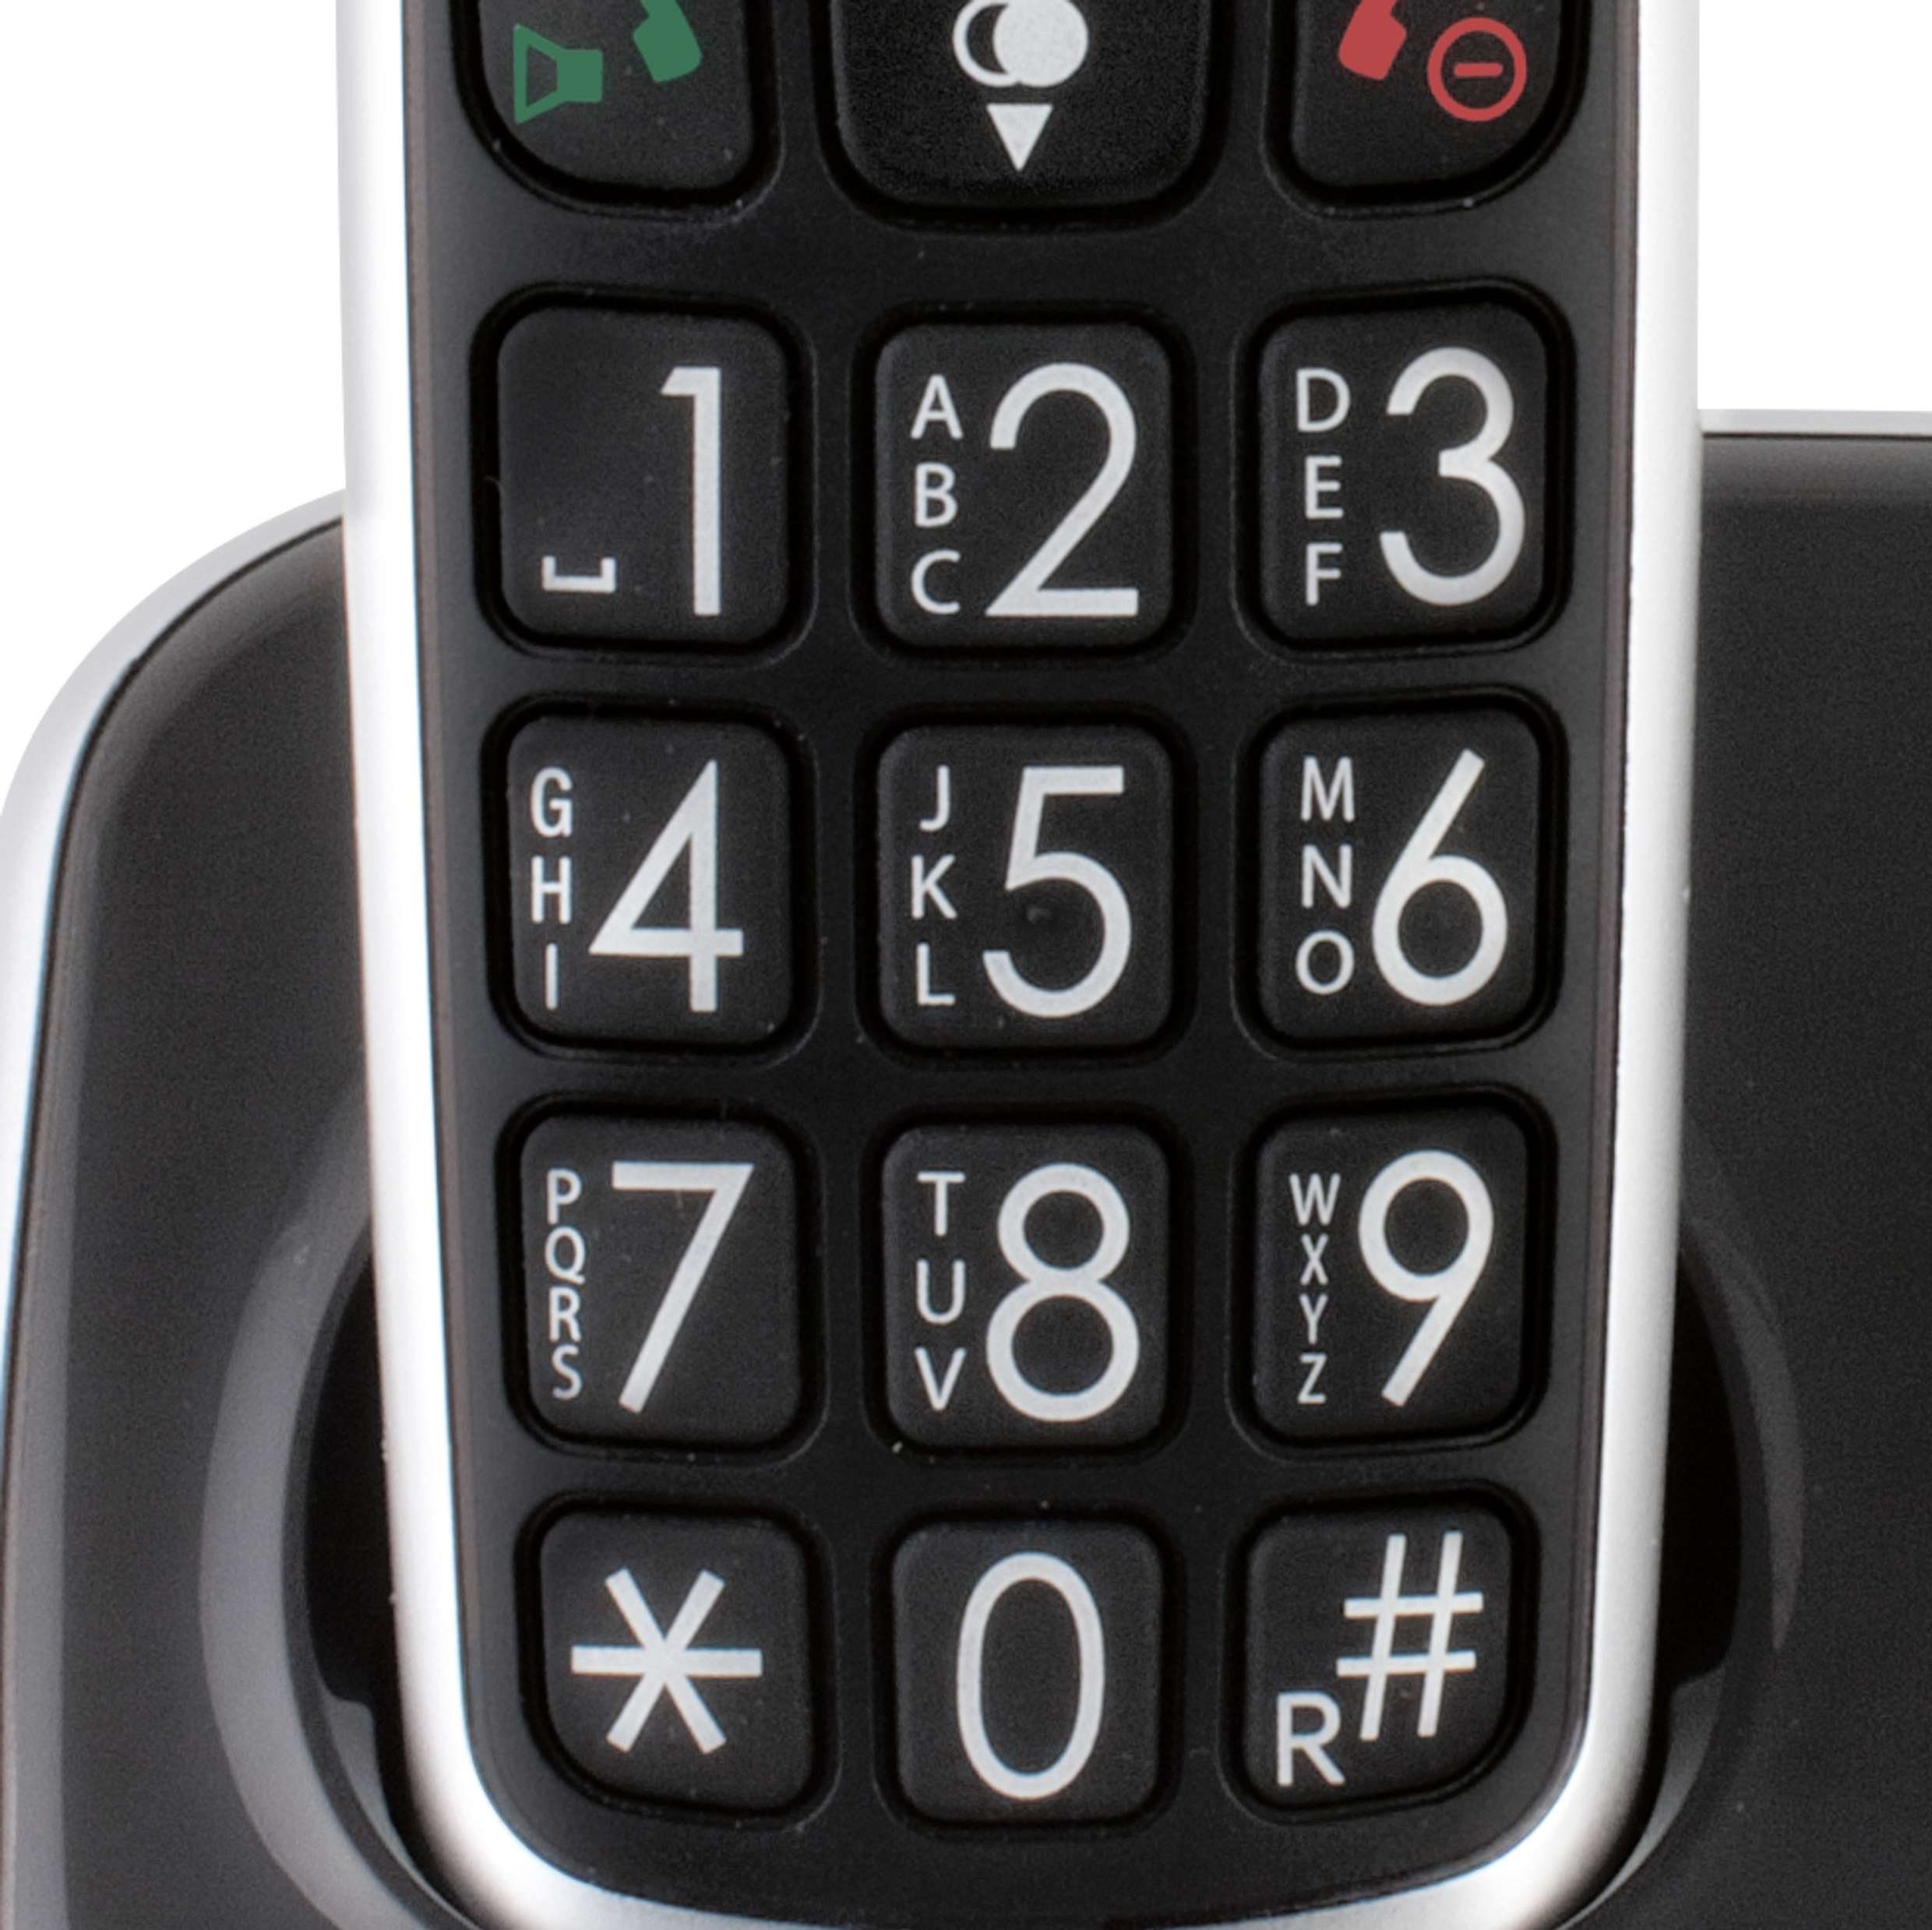 Fysic FX-6020 Schnurloses DECT-Telefon (Mobilteile: große 2, Hörgerätkompatibel, Tasten, großes Display)